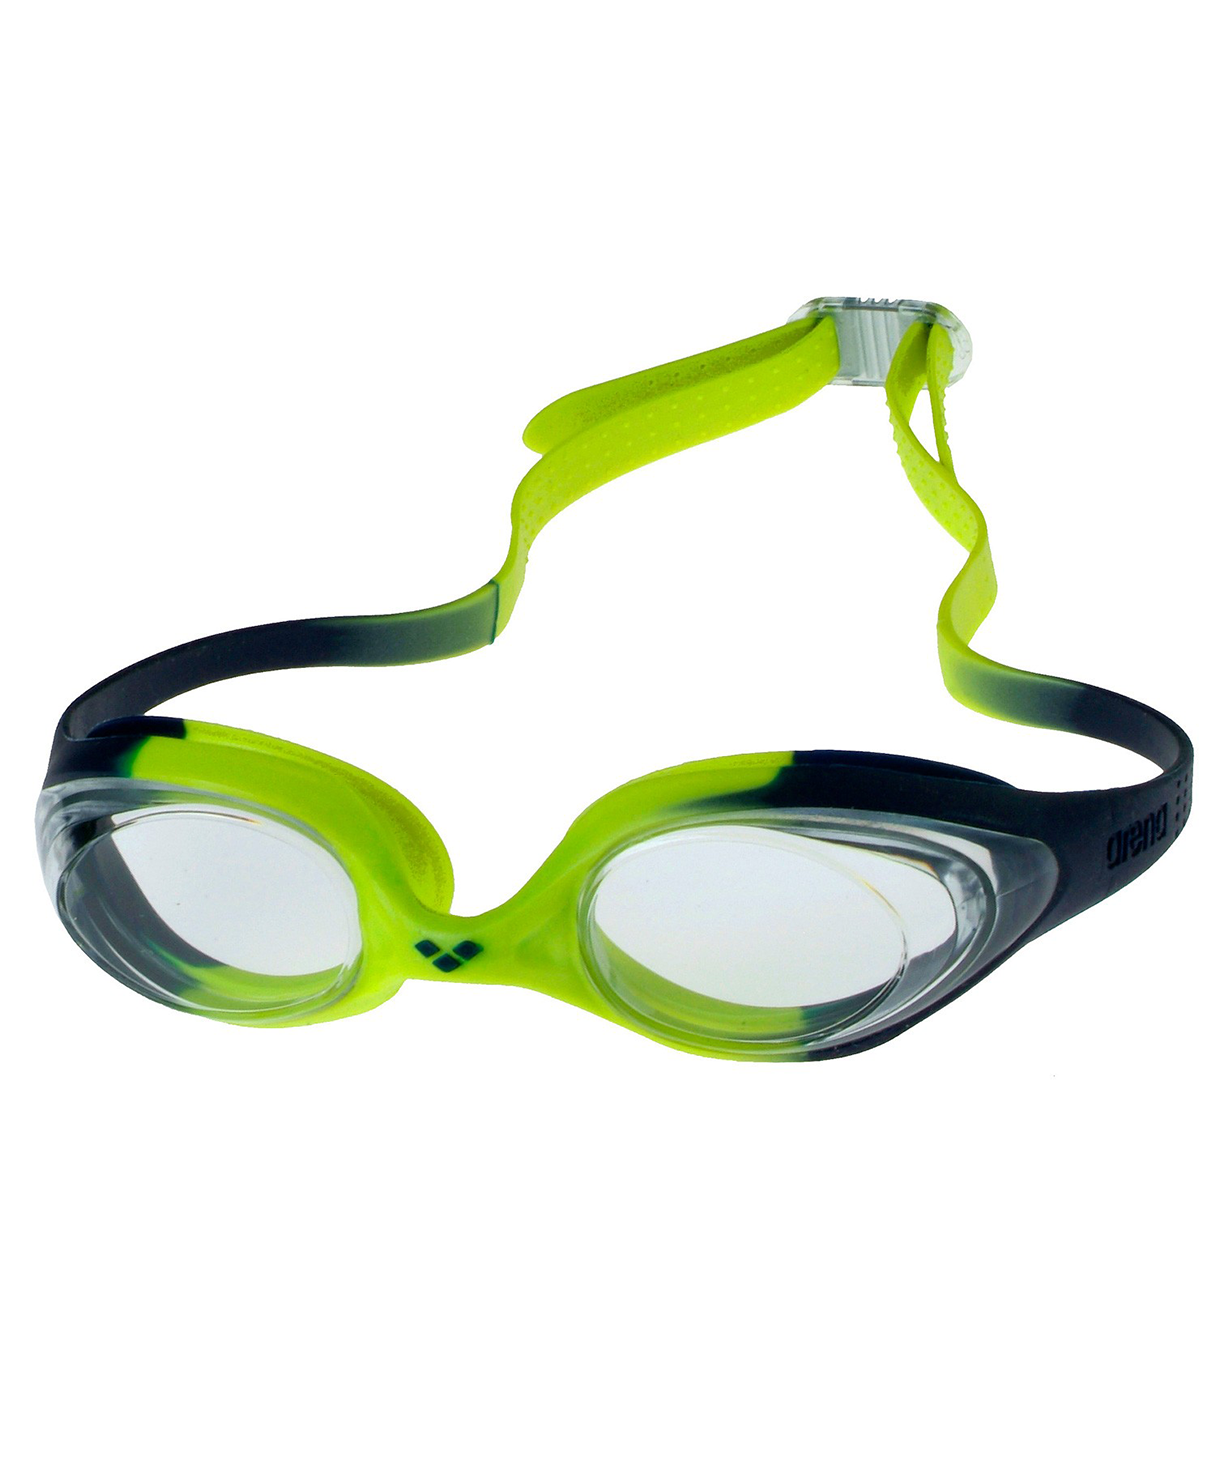 Очки Арена для плавания детские. Arena очки для плавания детские. Spider Jr Арена очки. Очки Arena Millennium для плавания. Arena jr